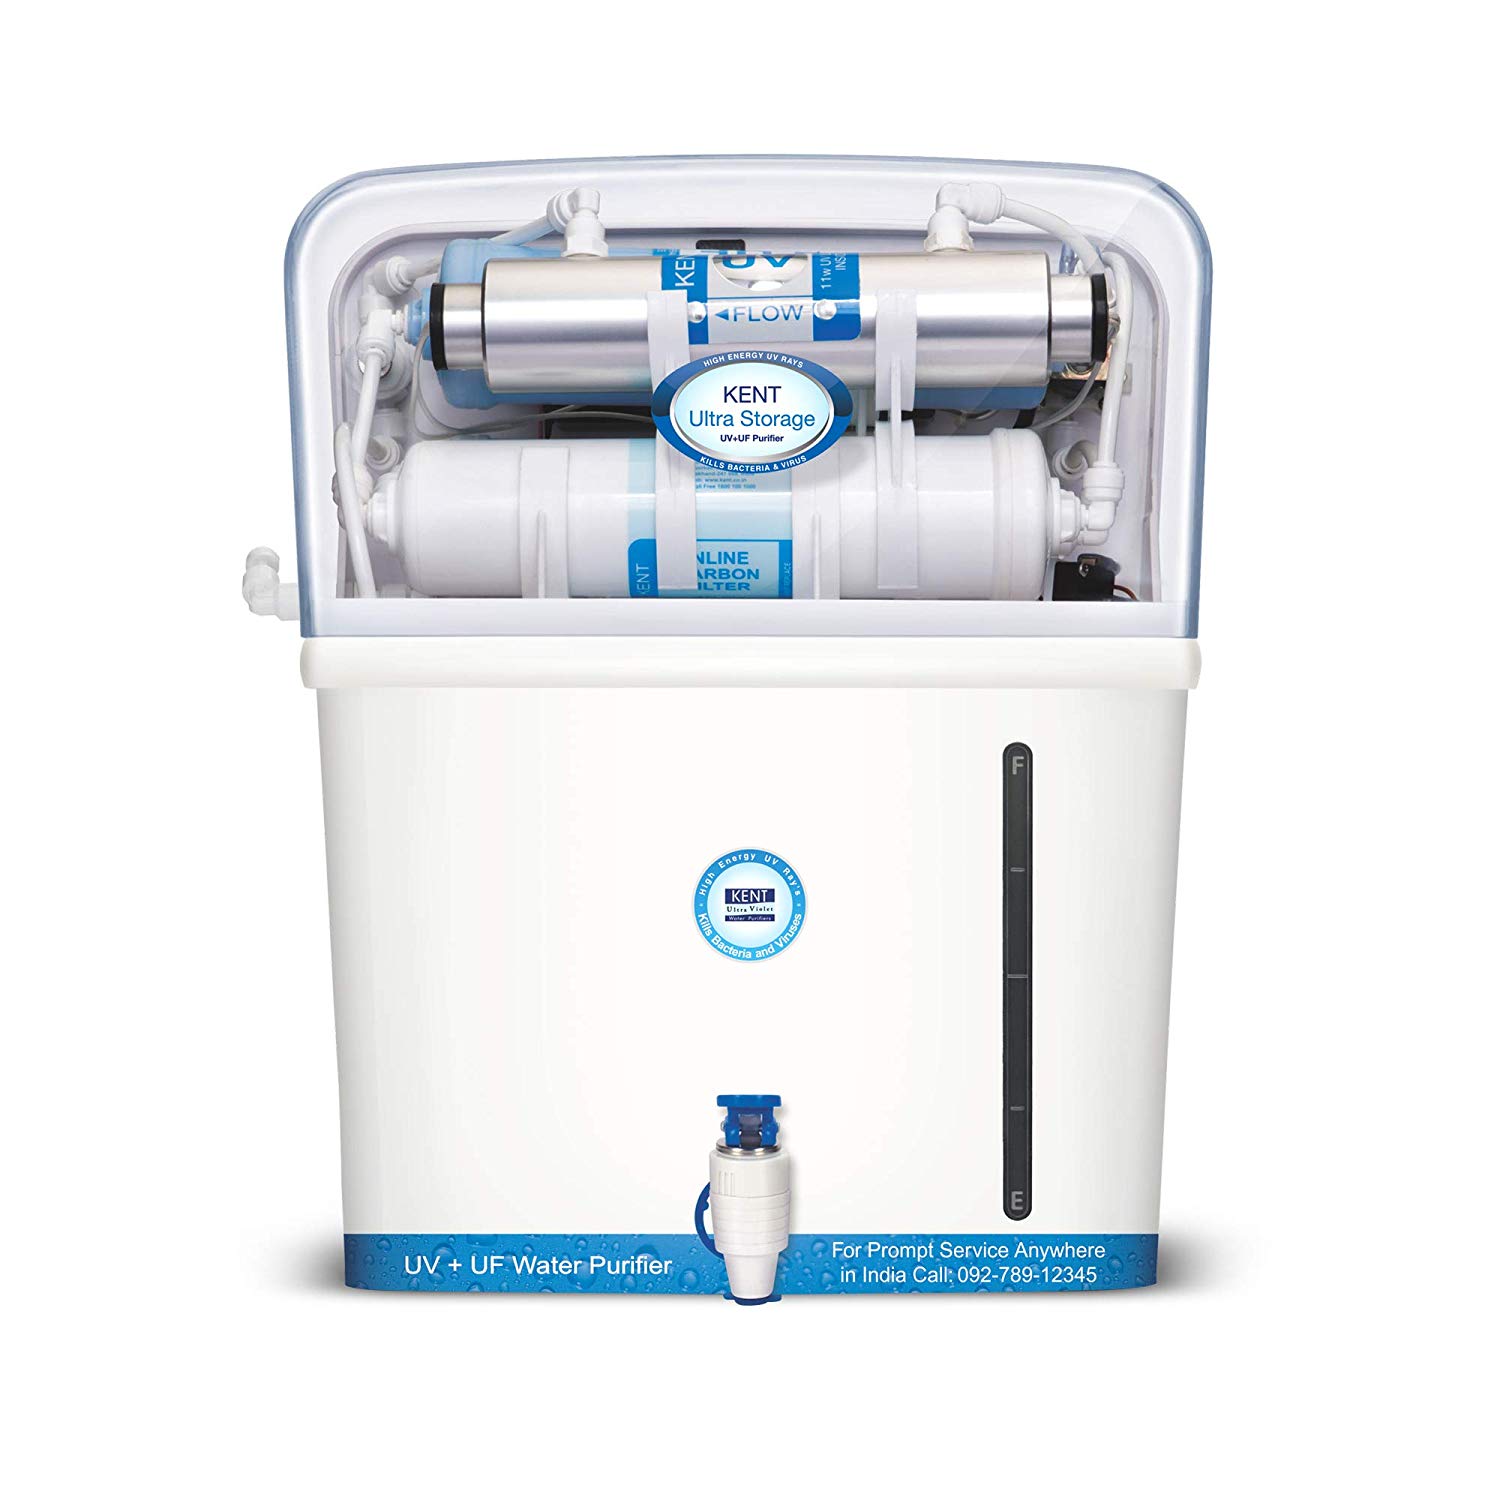 kent ultra storage 7 l, uv and uf water purifier